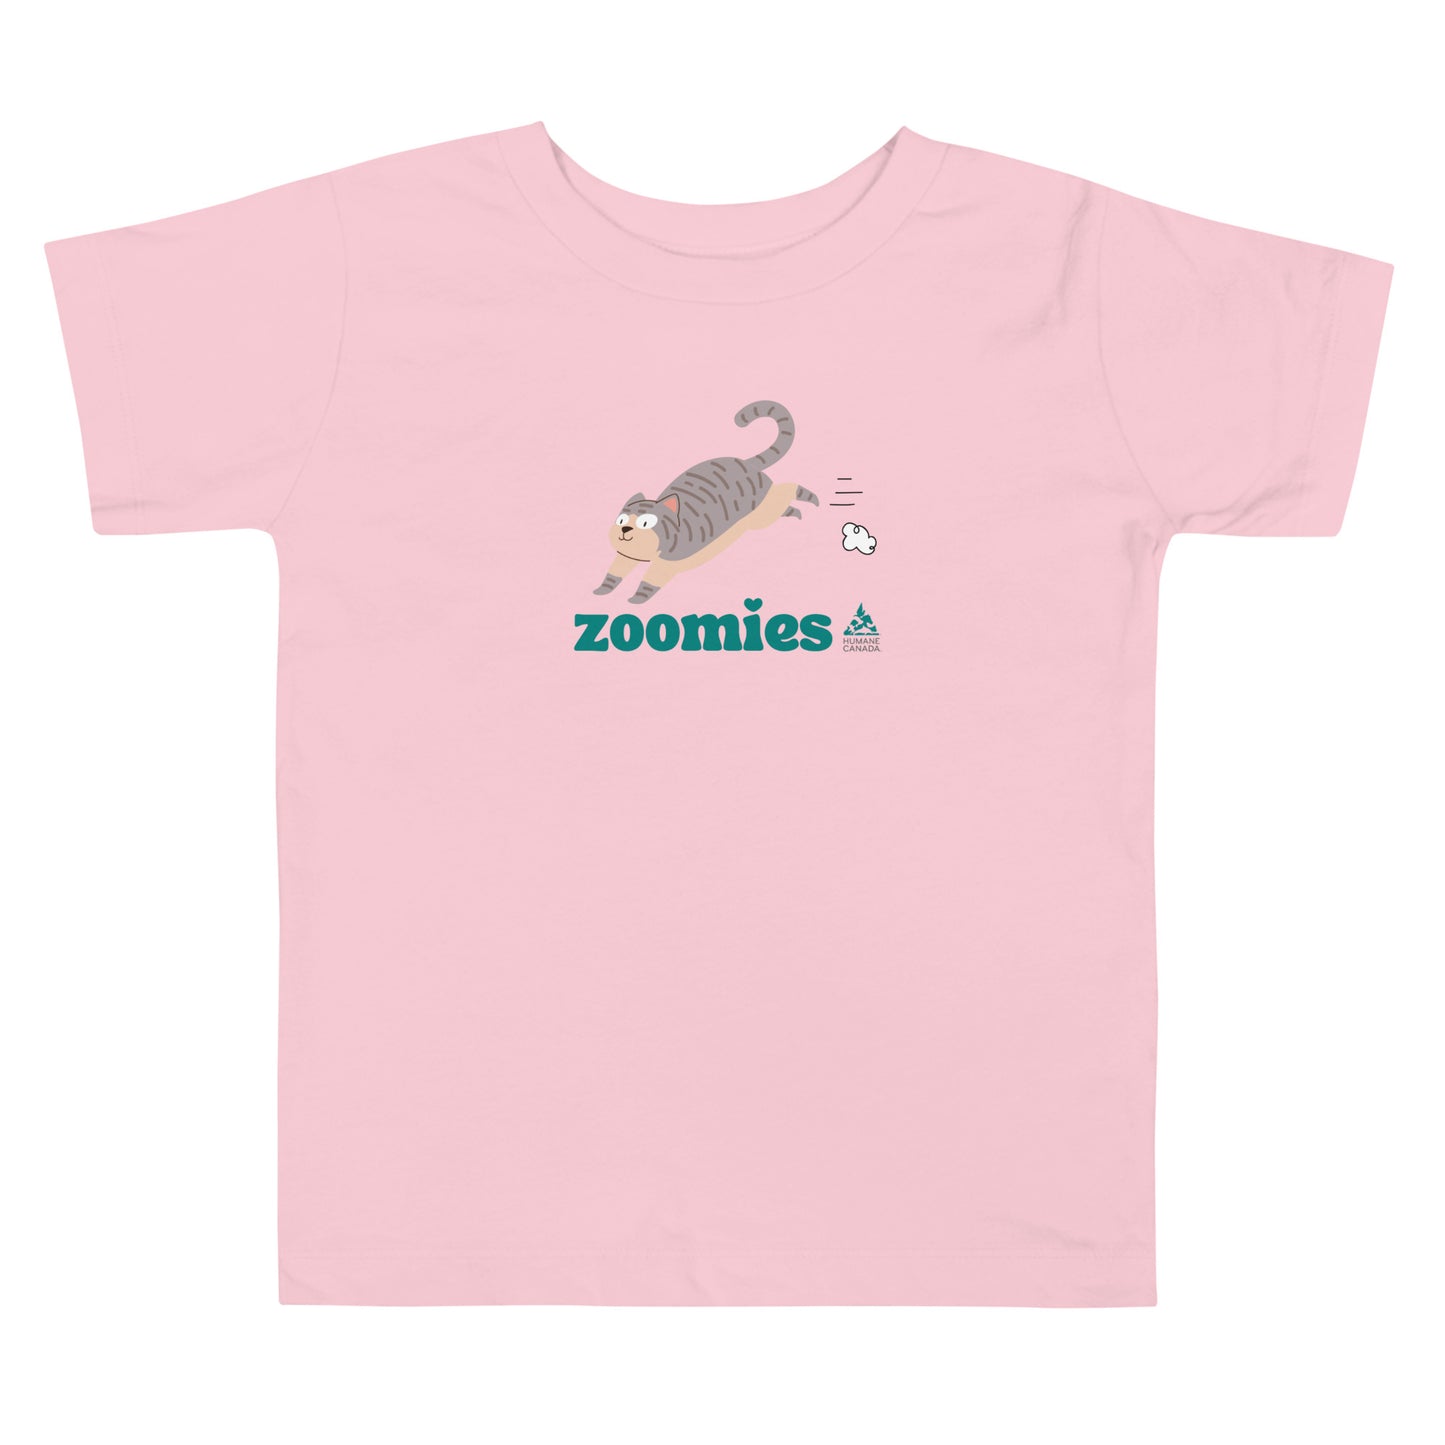 Zoomies (Cat)- Toddler Short Sleeve Tee